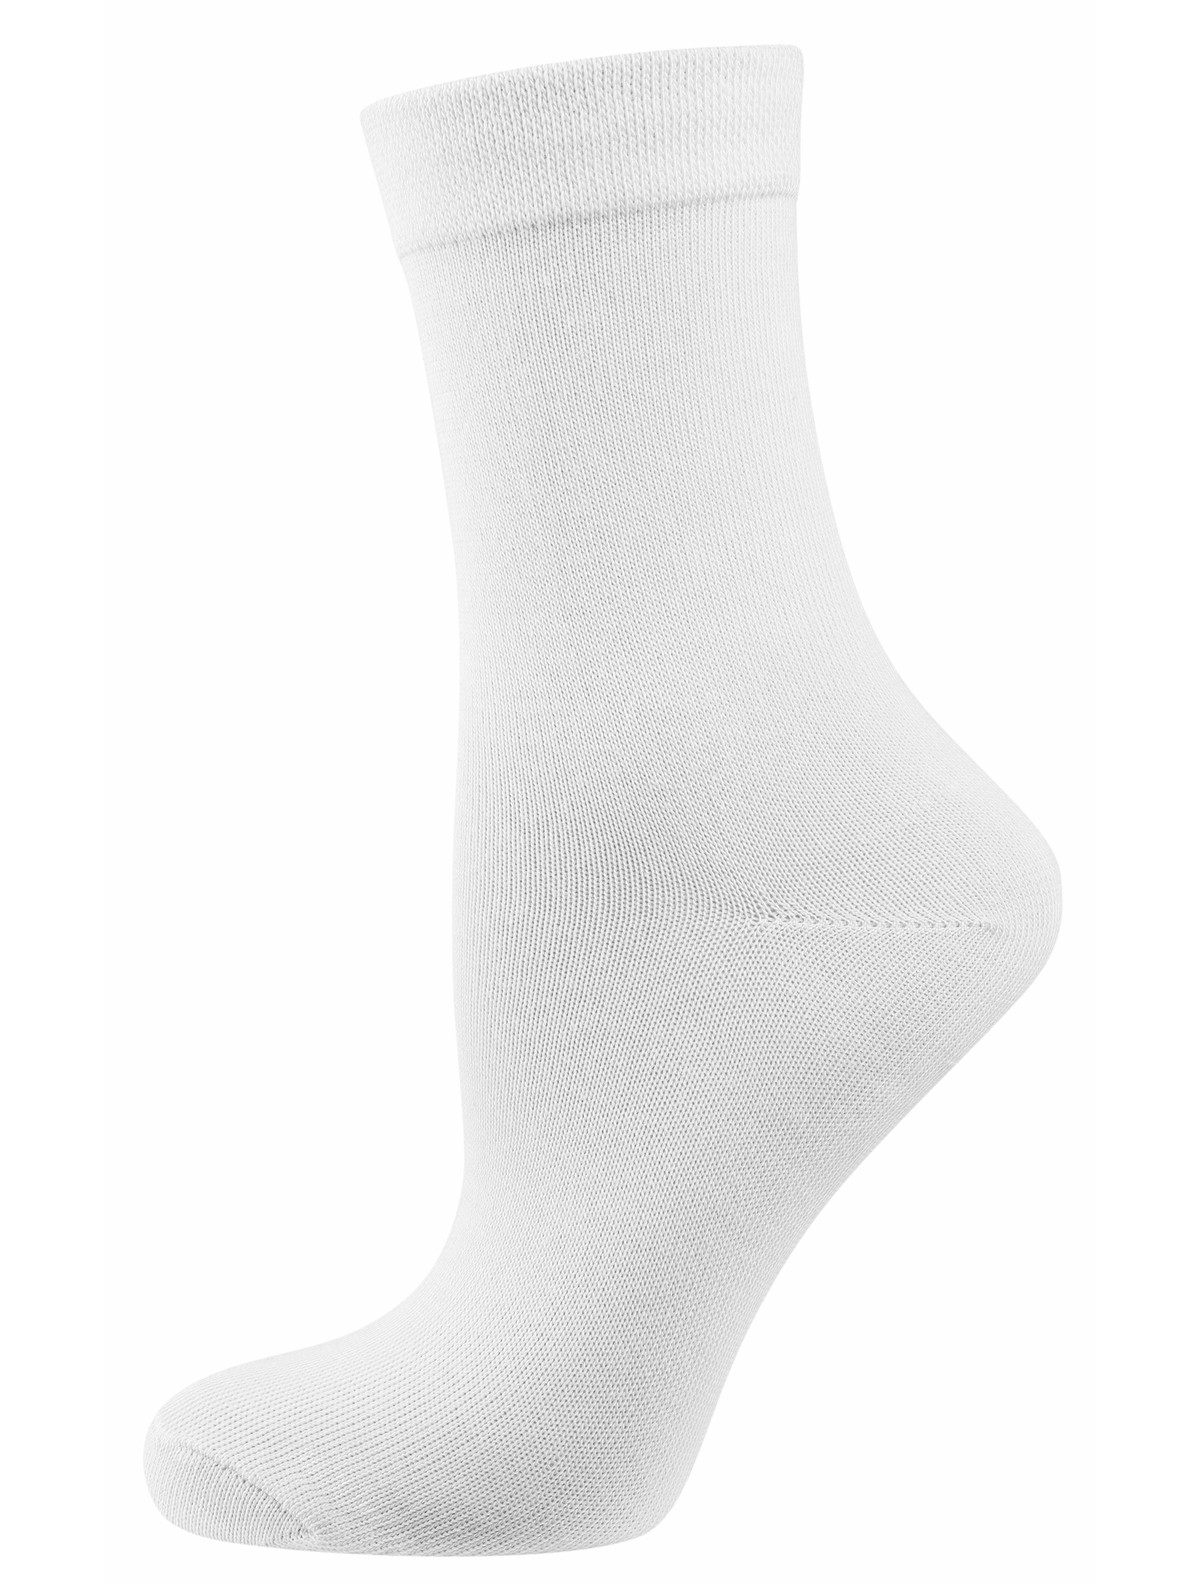 Costs Pantyhose Worn Socks 70